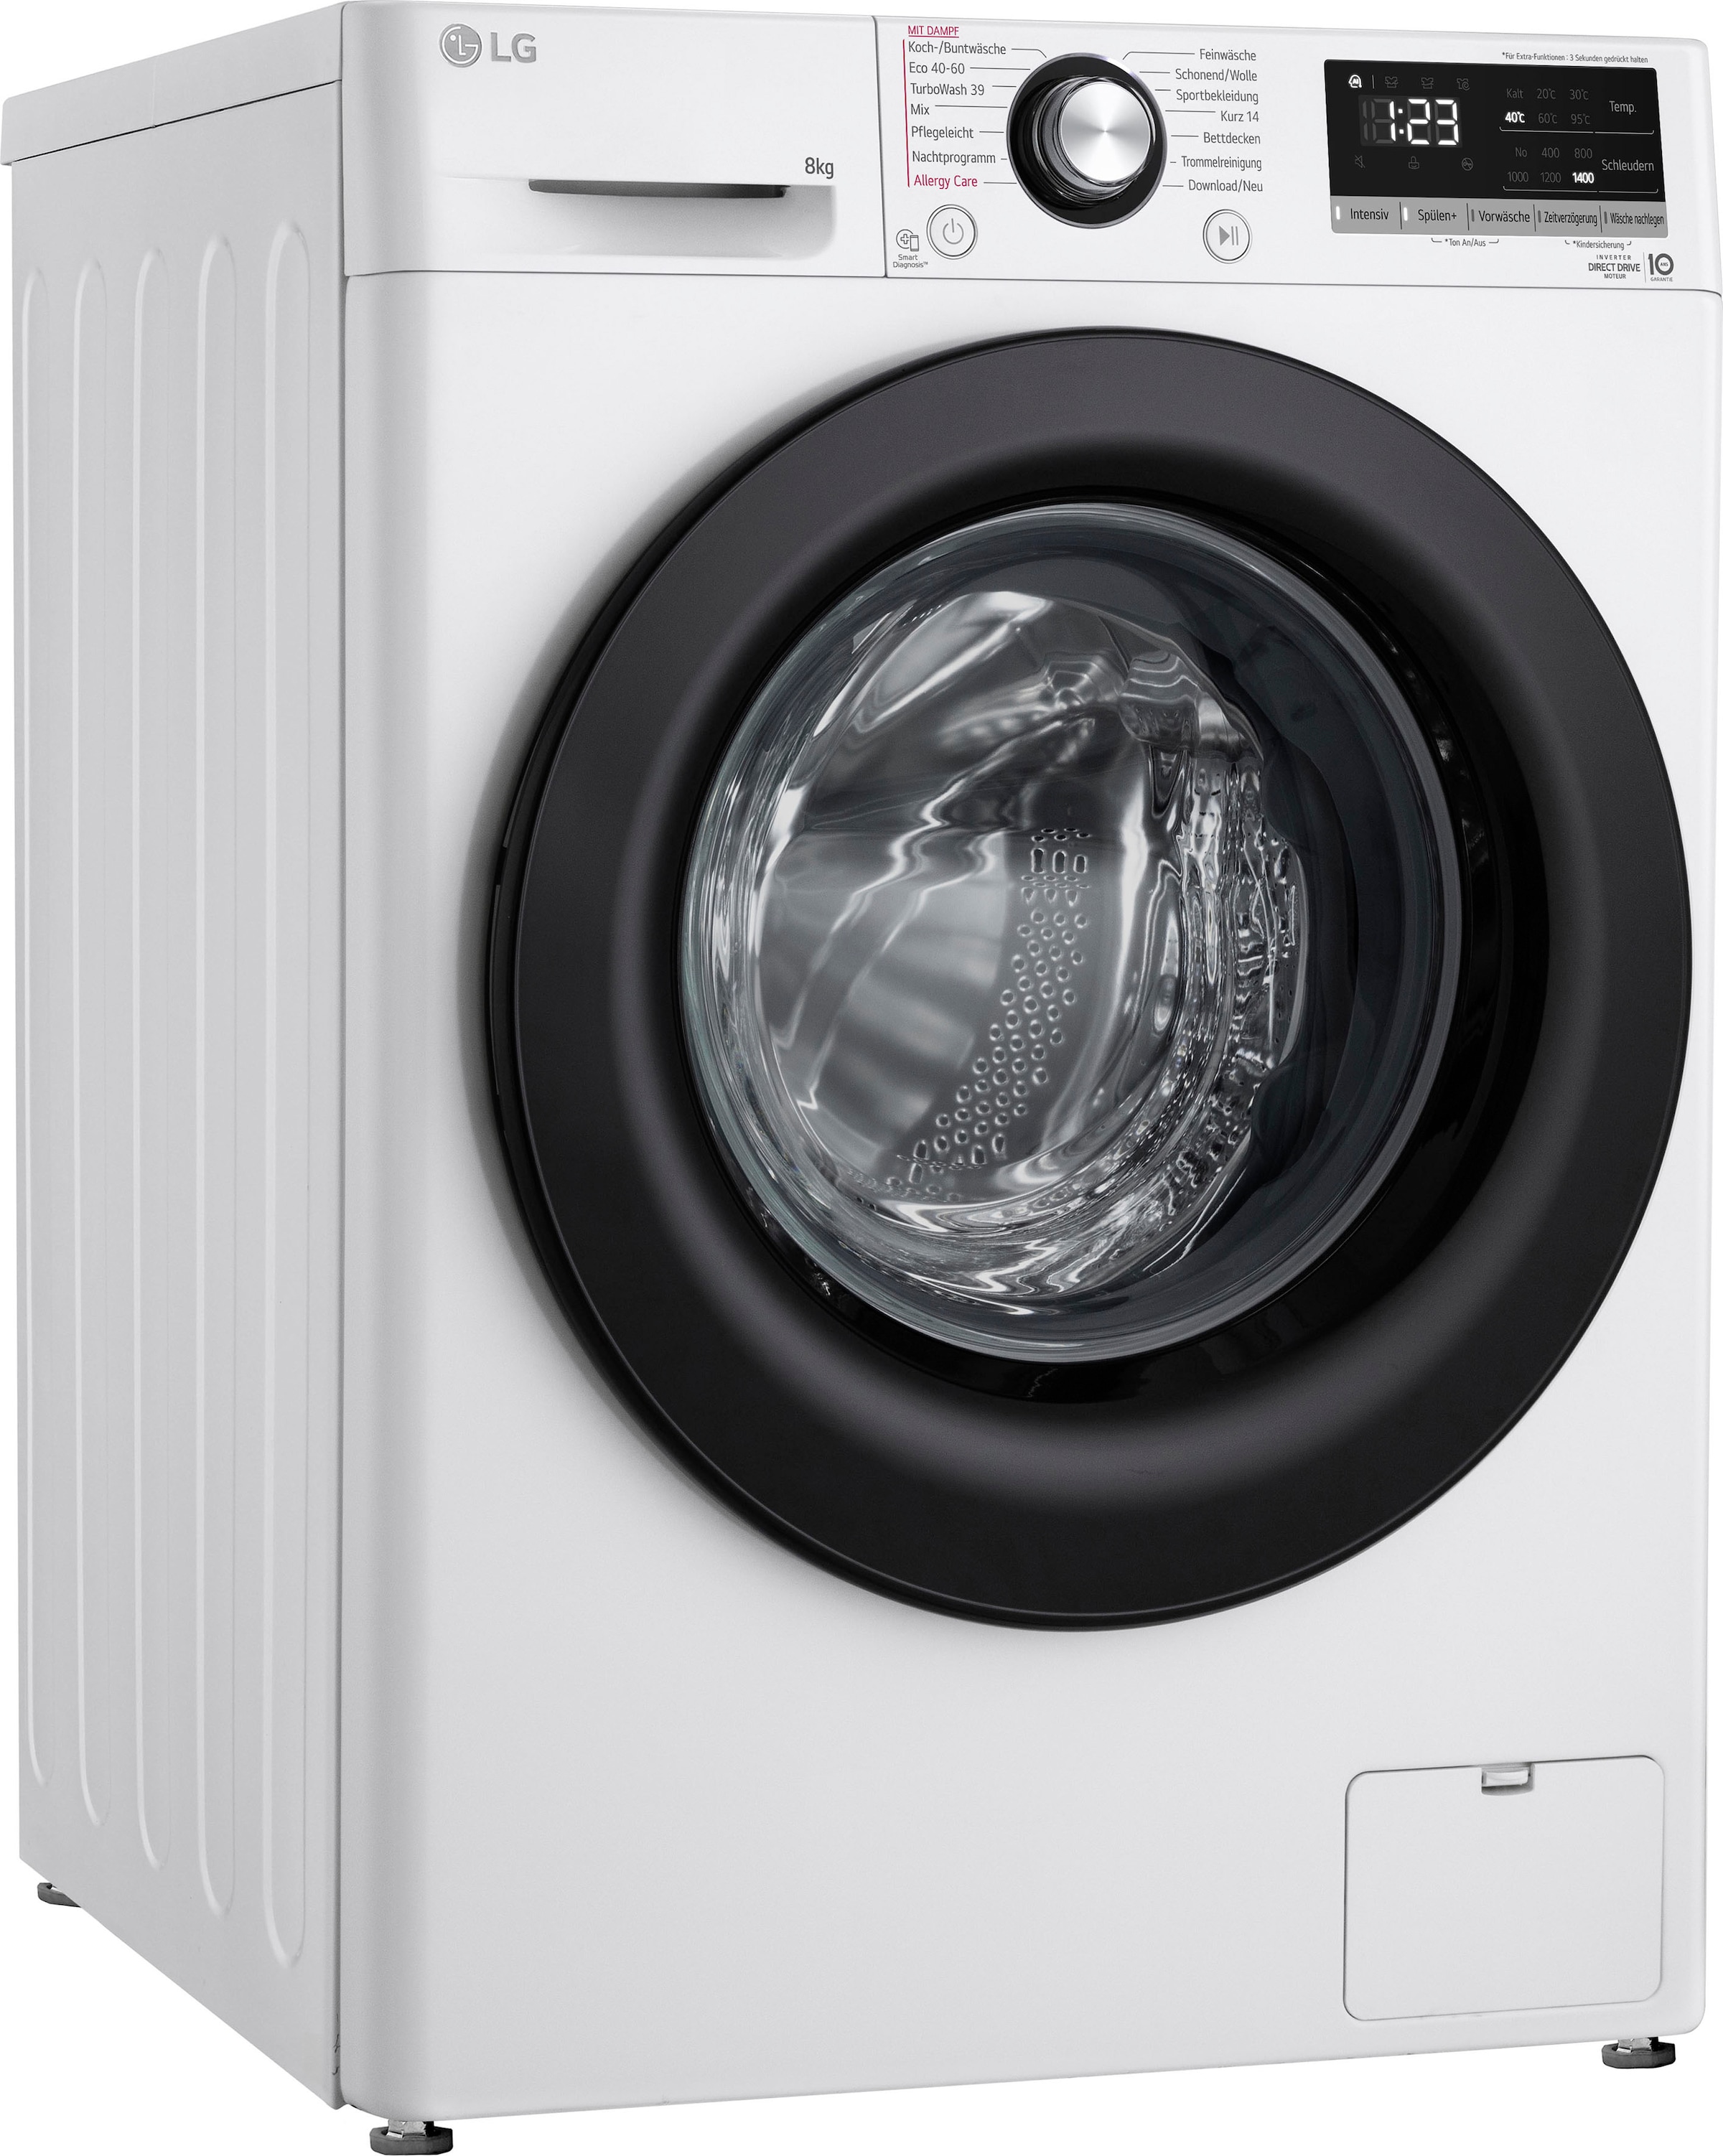 LG Waschmaschine »F4WV4085«, U/min kaufen 8 F4WV4085, 1400 kg